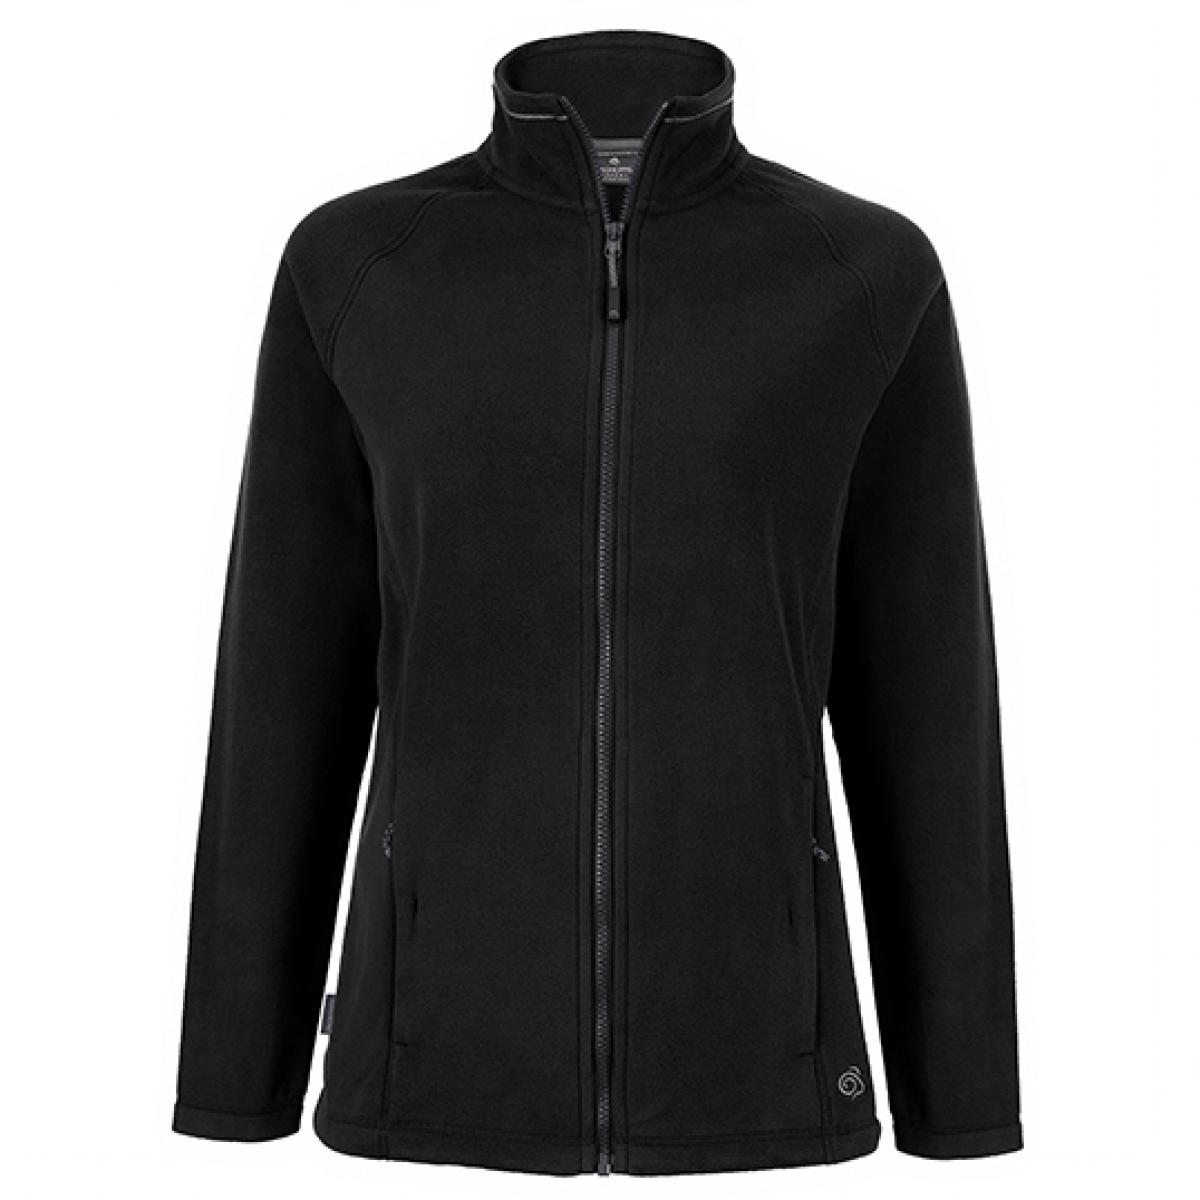 Hersteller: Craghoppers Expert Herstellernummer: CEA002 Artikelbezeichnung: Expert Womens Miska 200 Fleece Jacket Farbe: Black